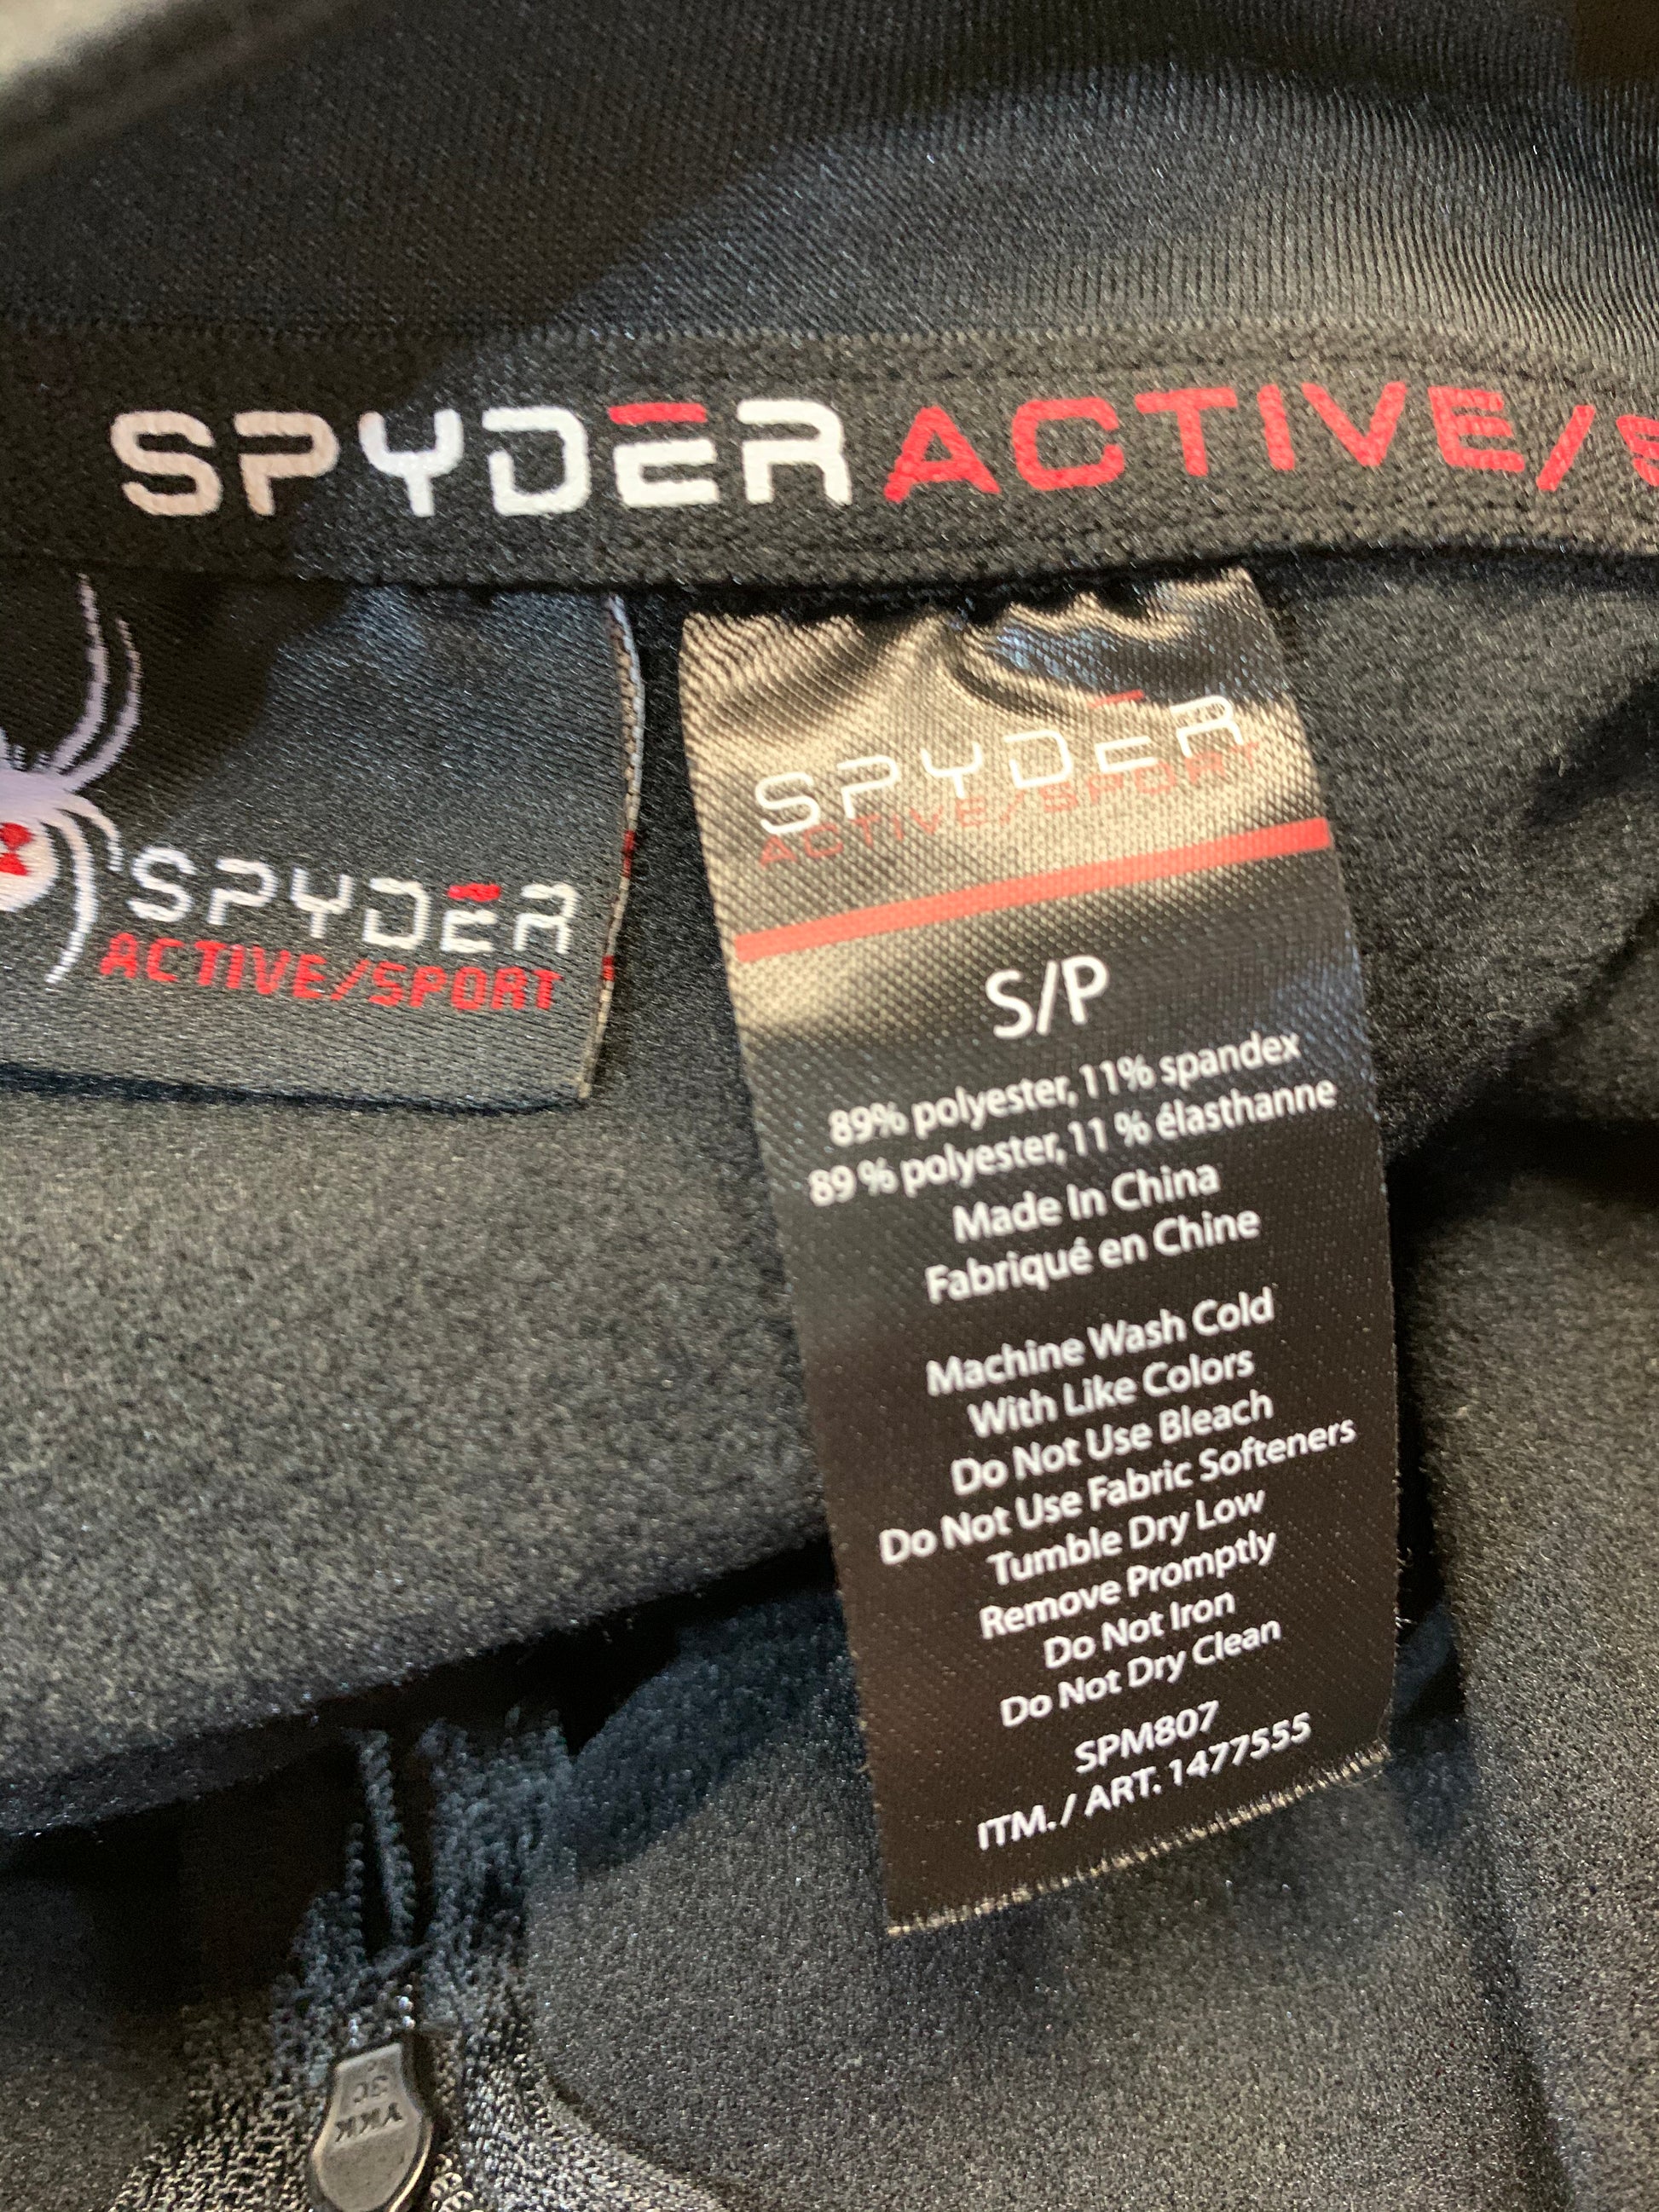 Spyder Active Men's Short Sleeve Tee (Black, Large) 